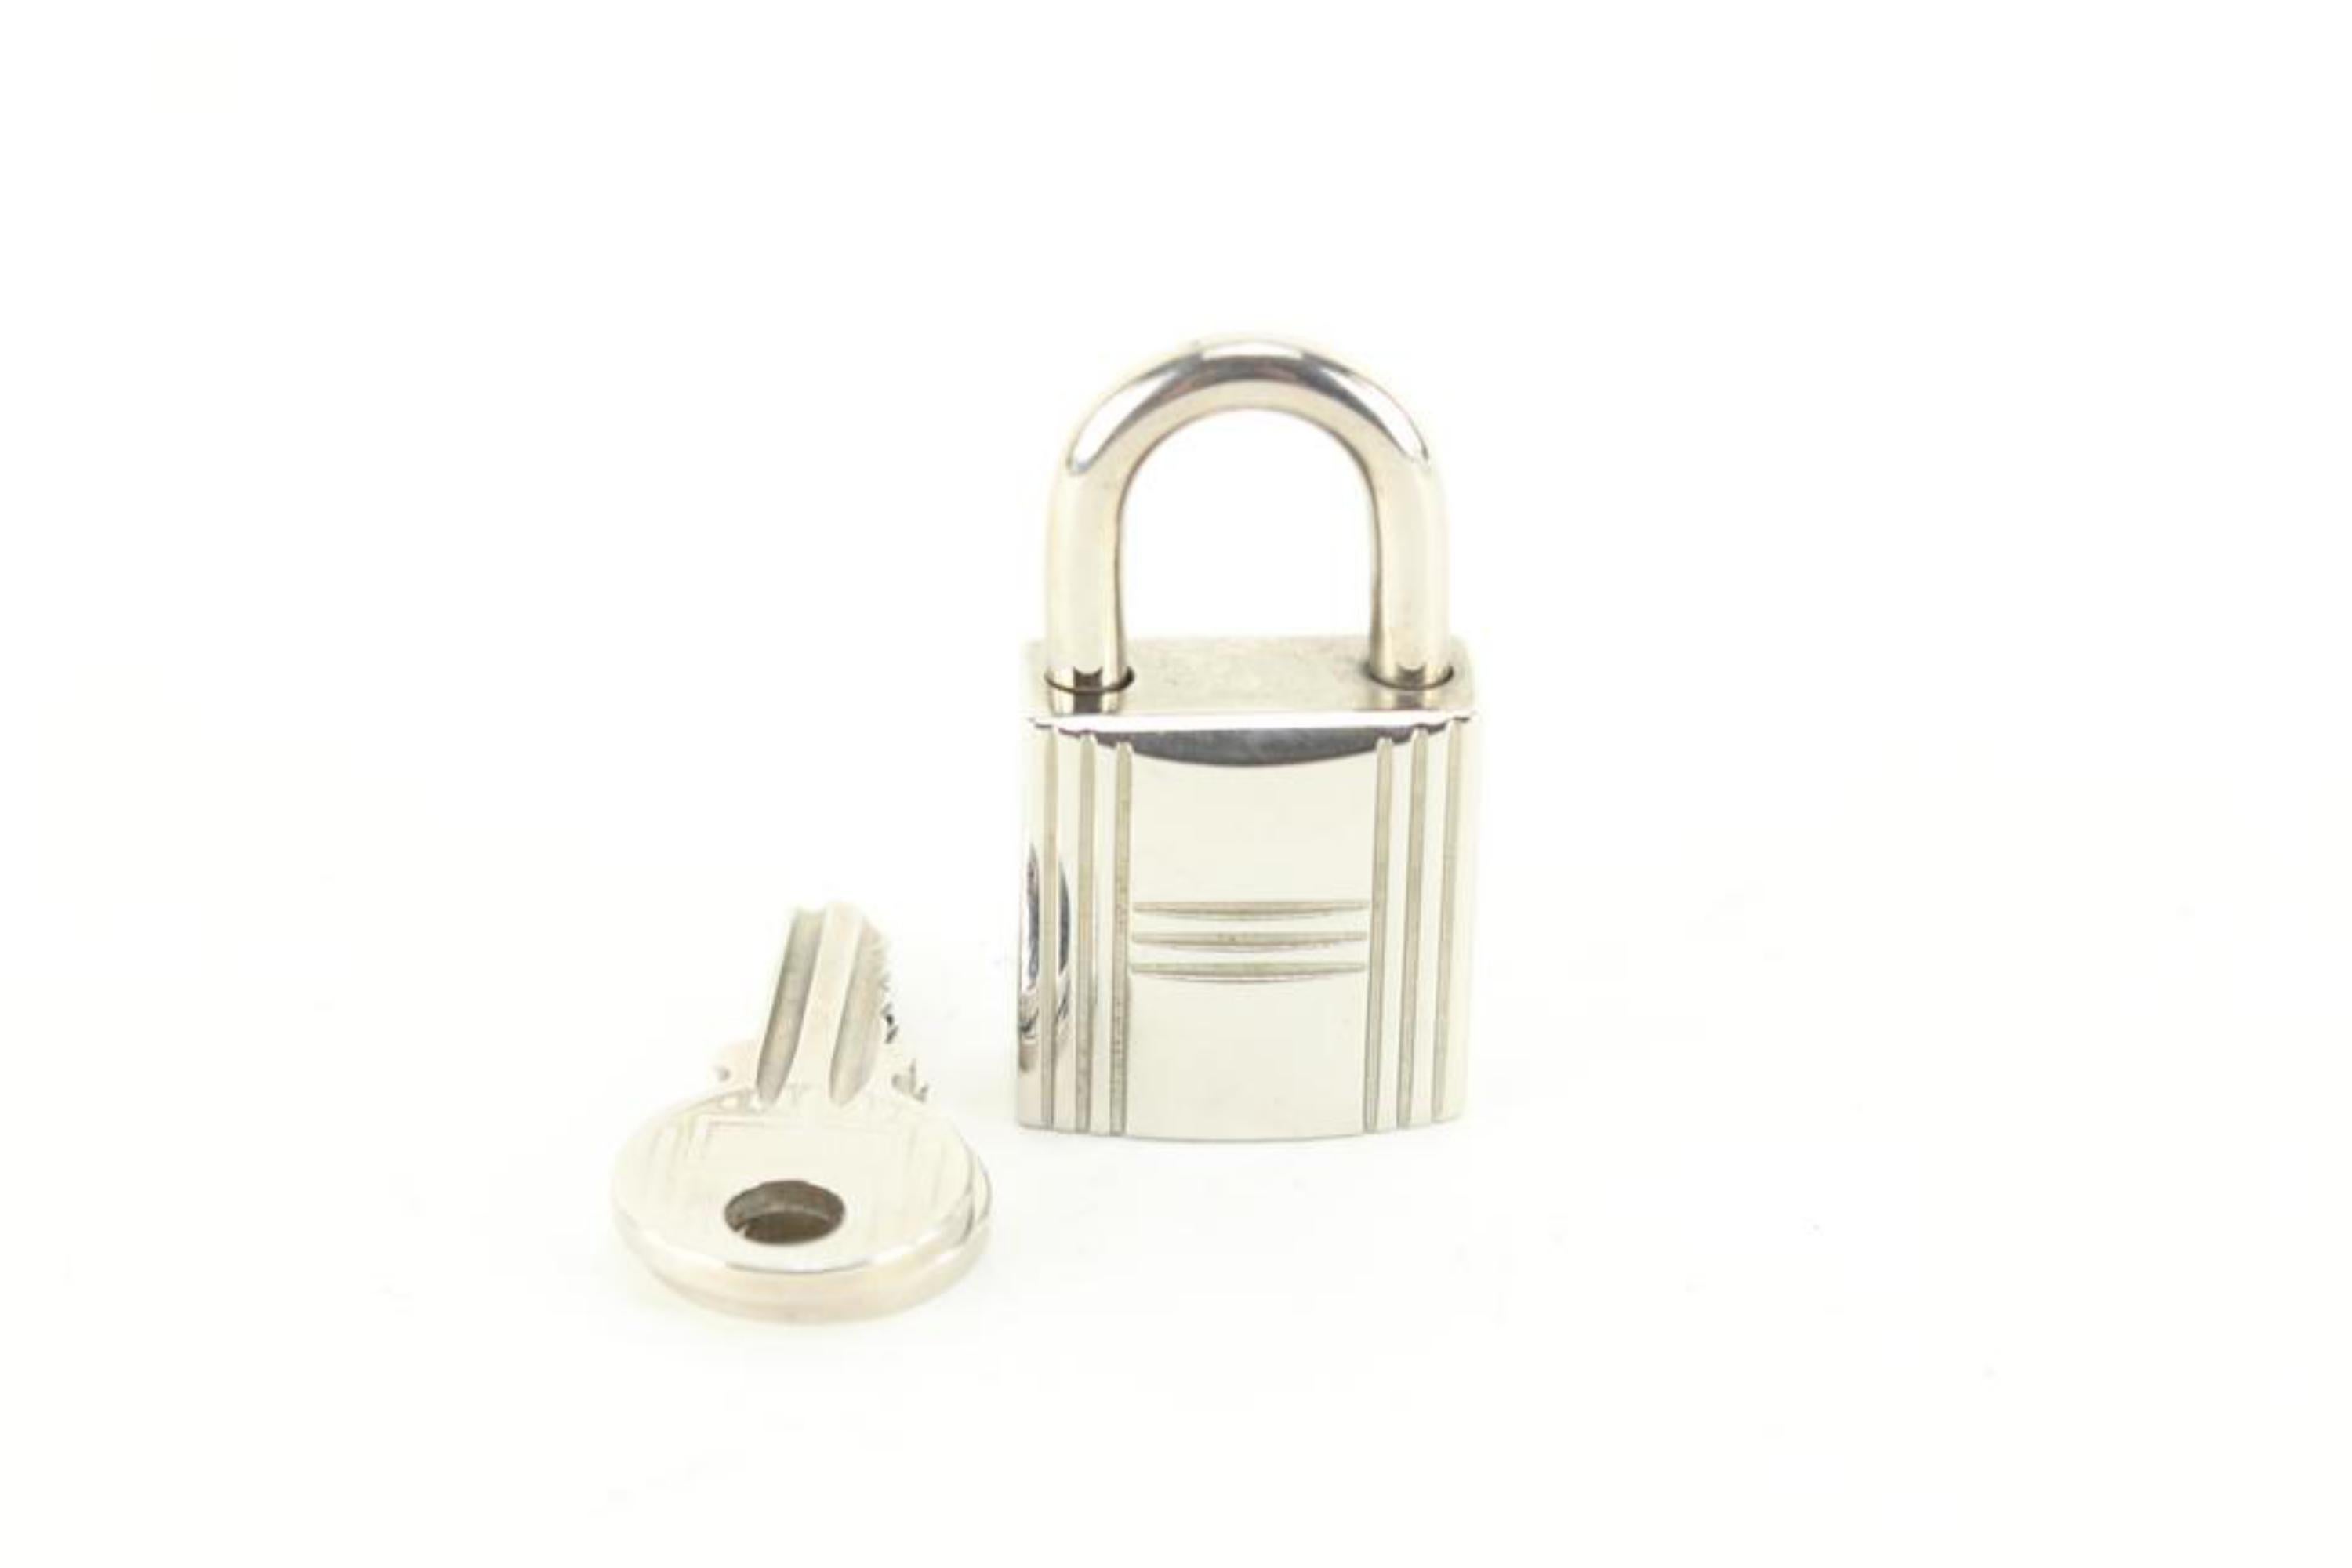 Hermès Palladium Cadena Padlock Lock and Key Set 8h712s 2